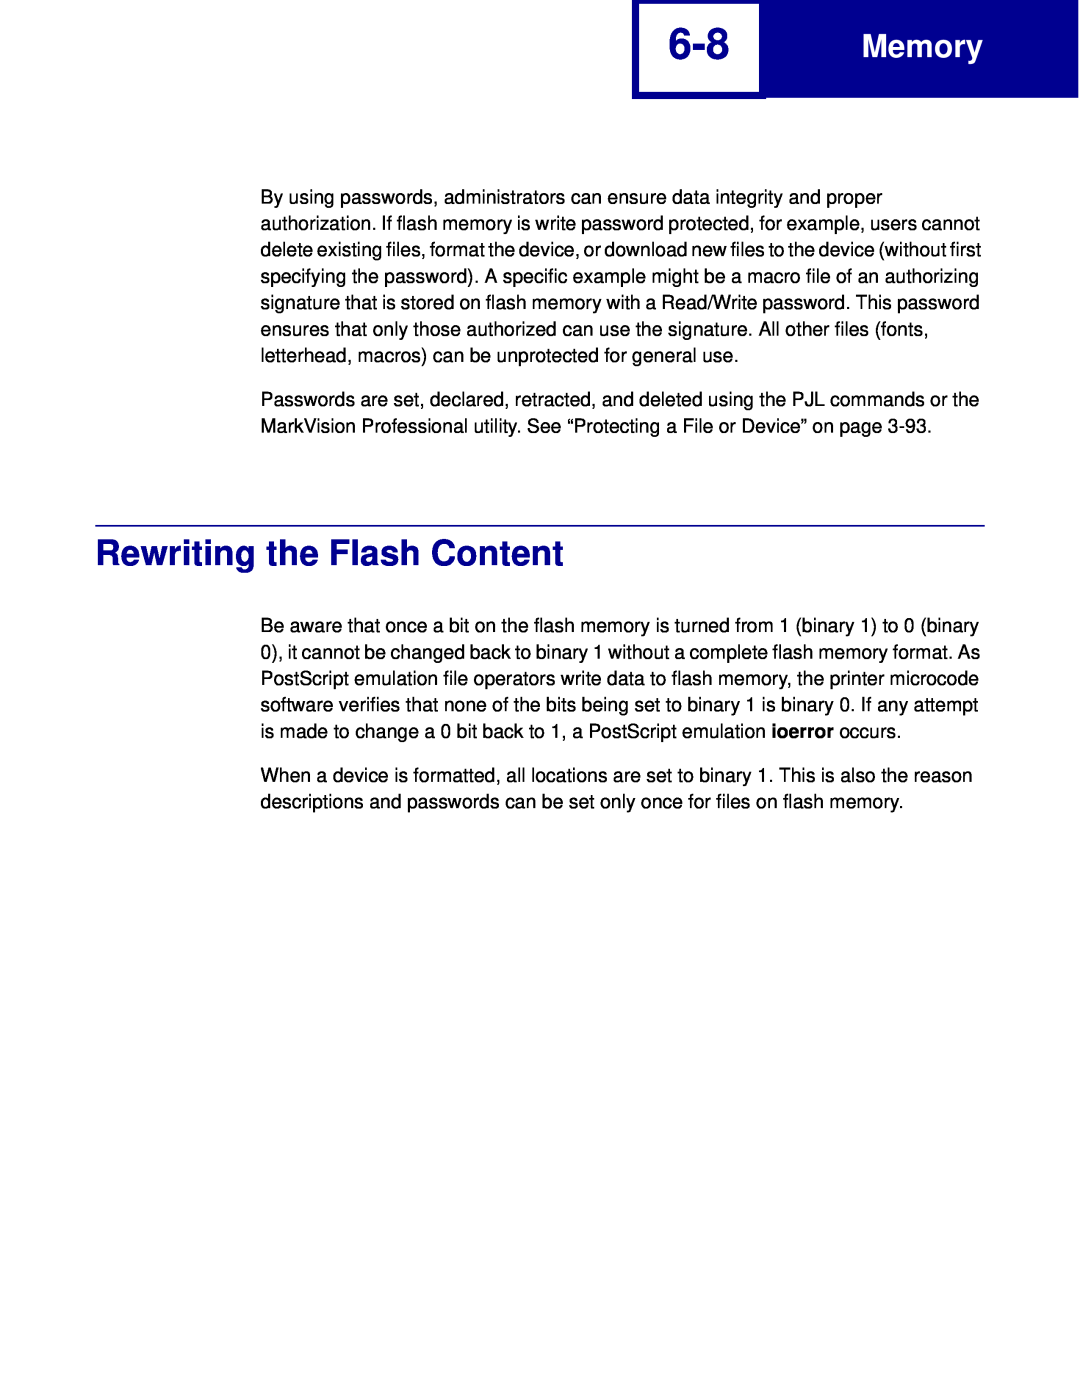 Lexmark C762, C760 manual Rewriting the Flash Content, Memory 